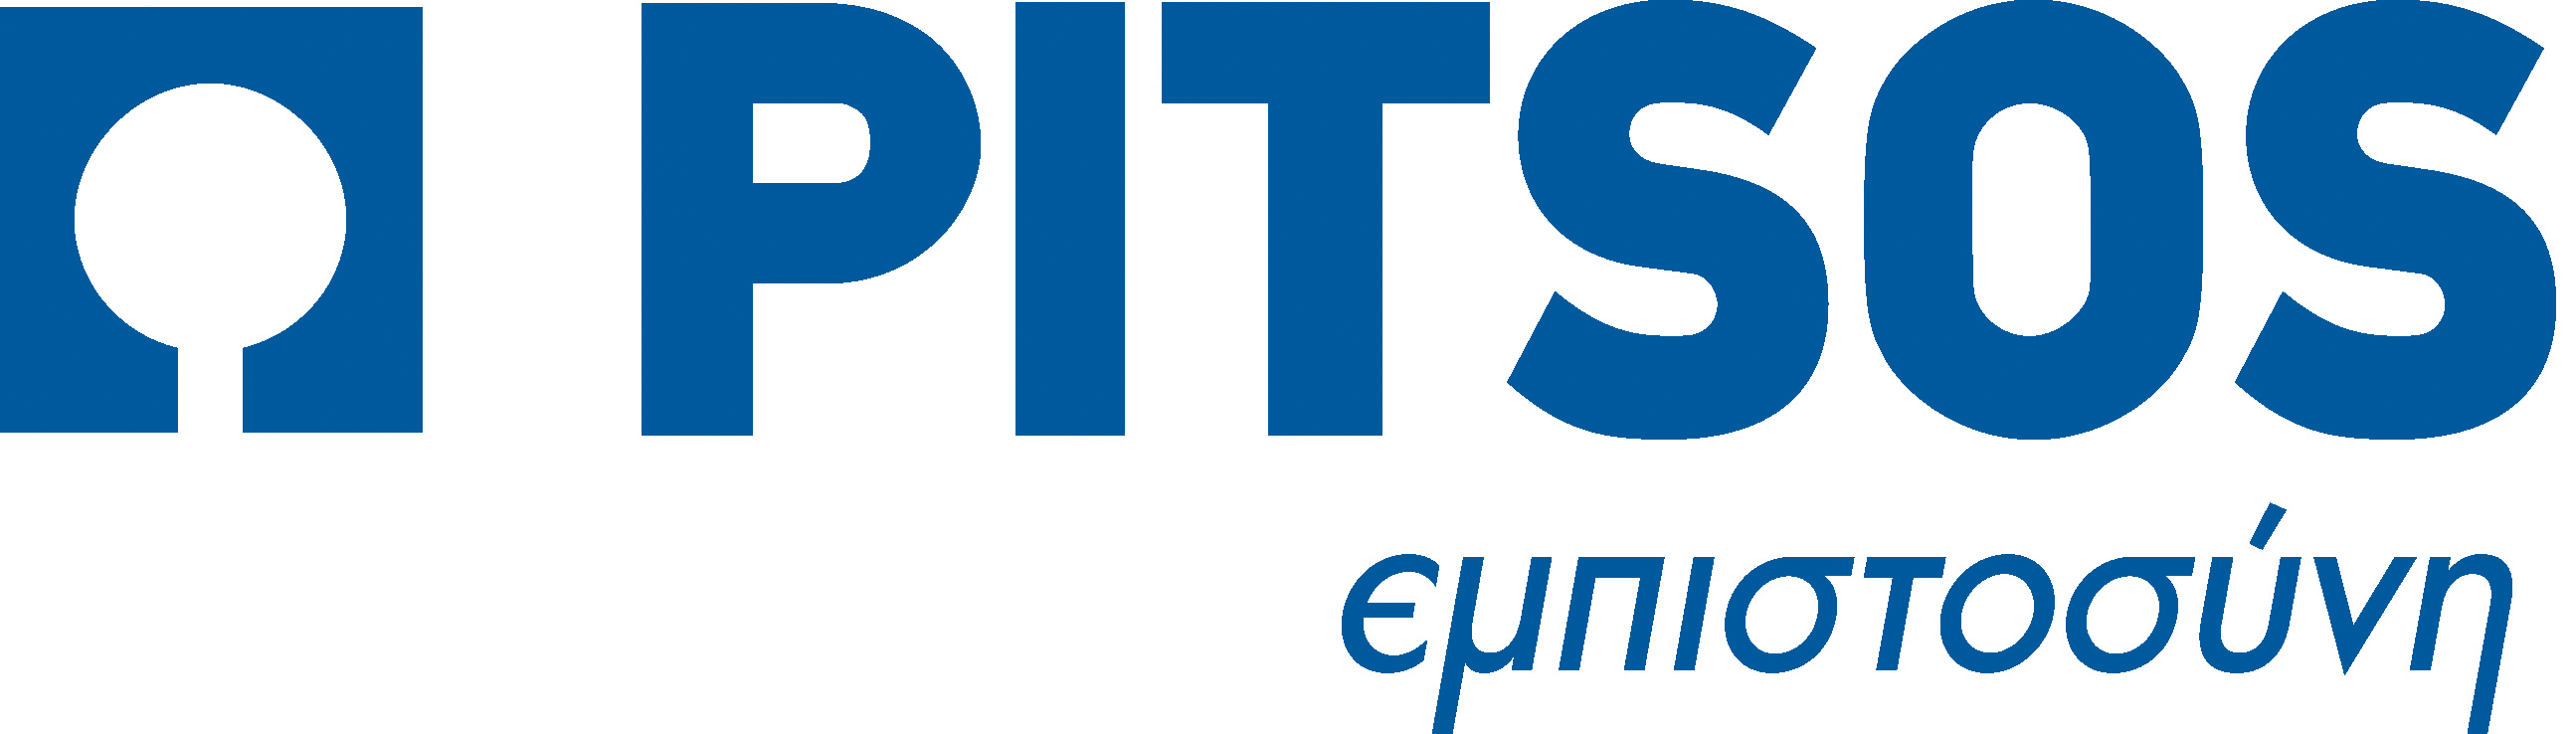 The Pitsos Brand. (Source: BSH Hausgeräte GmbH)